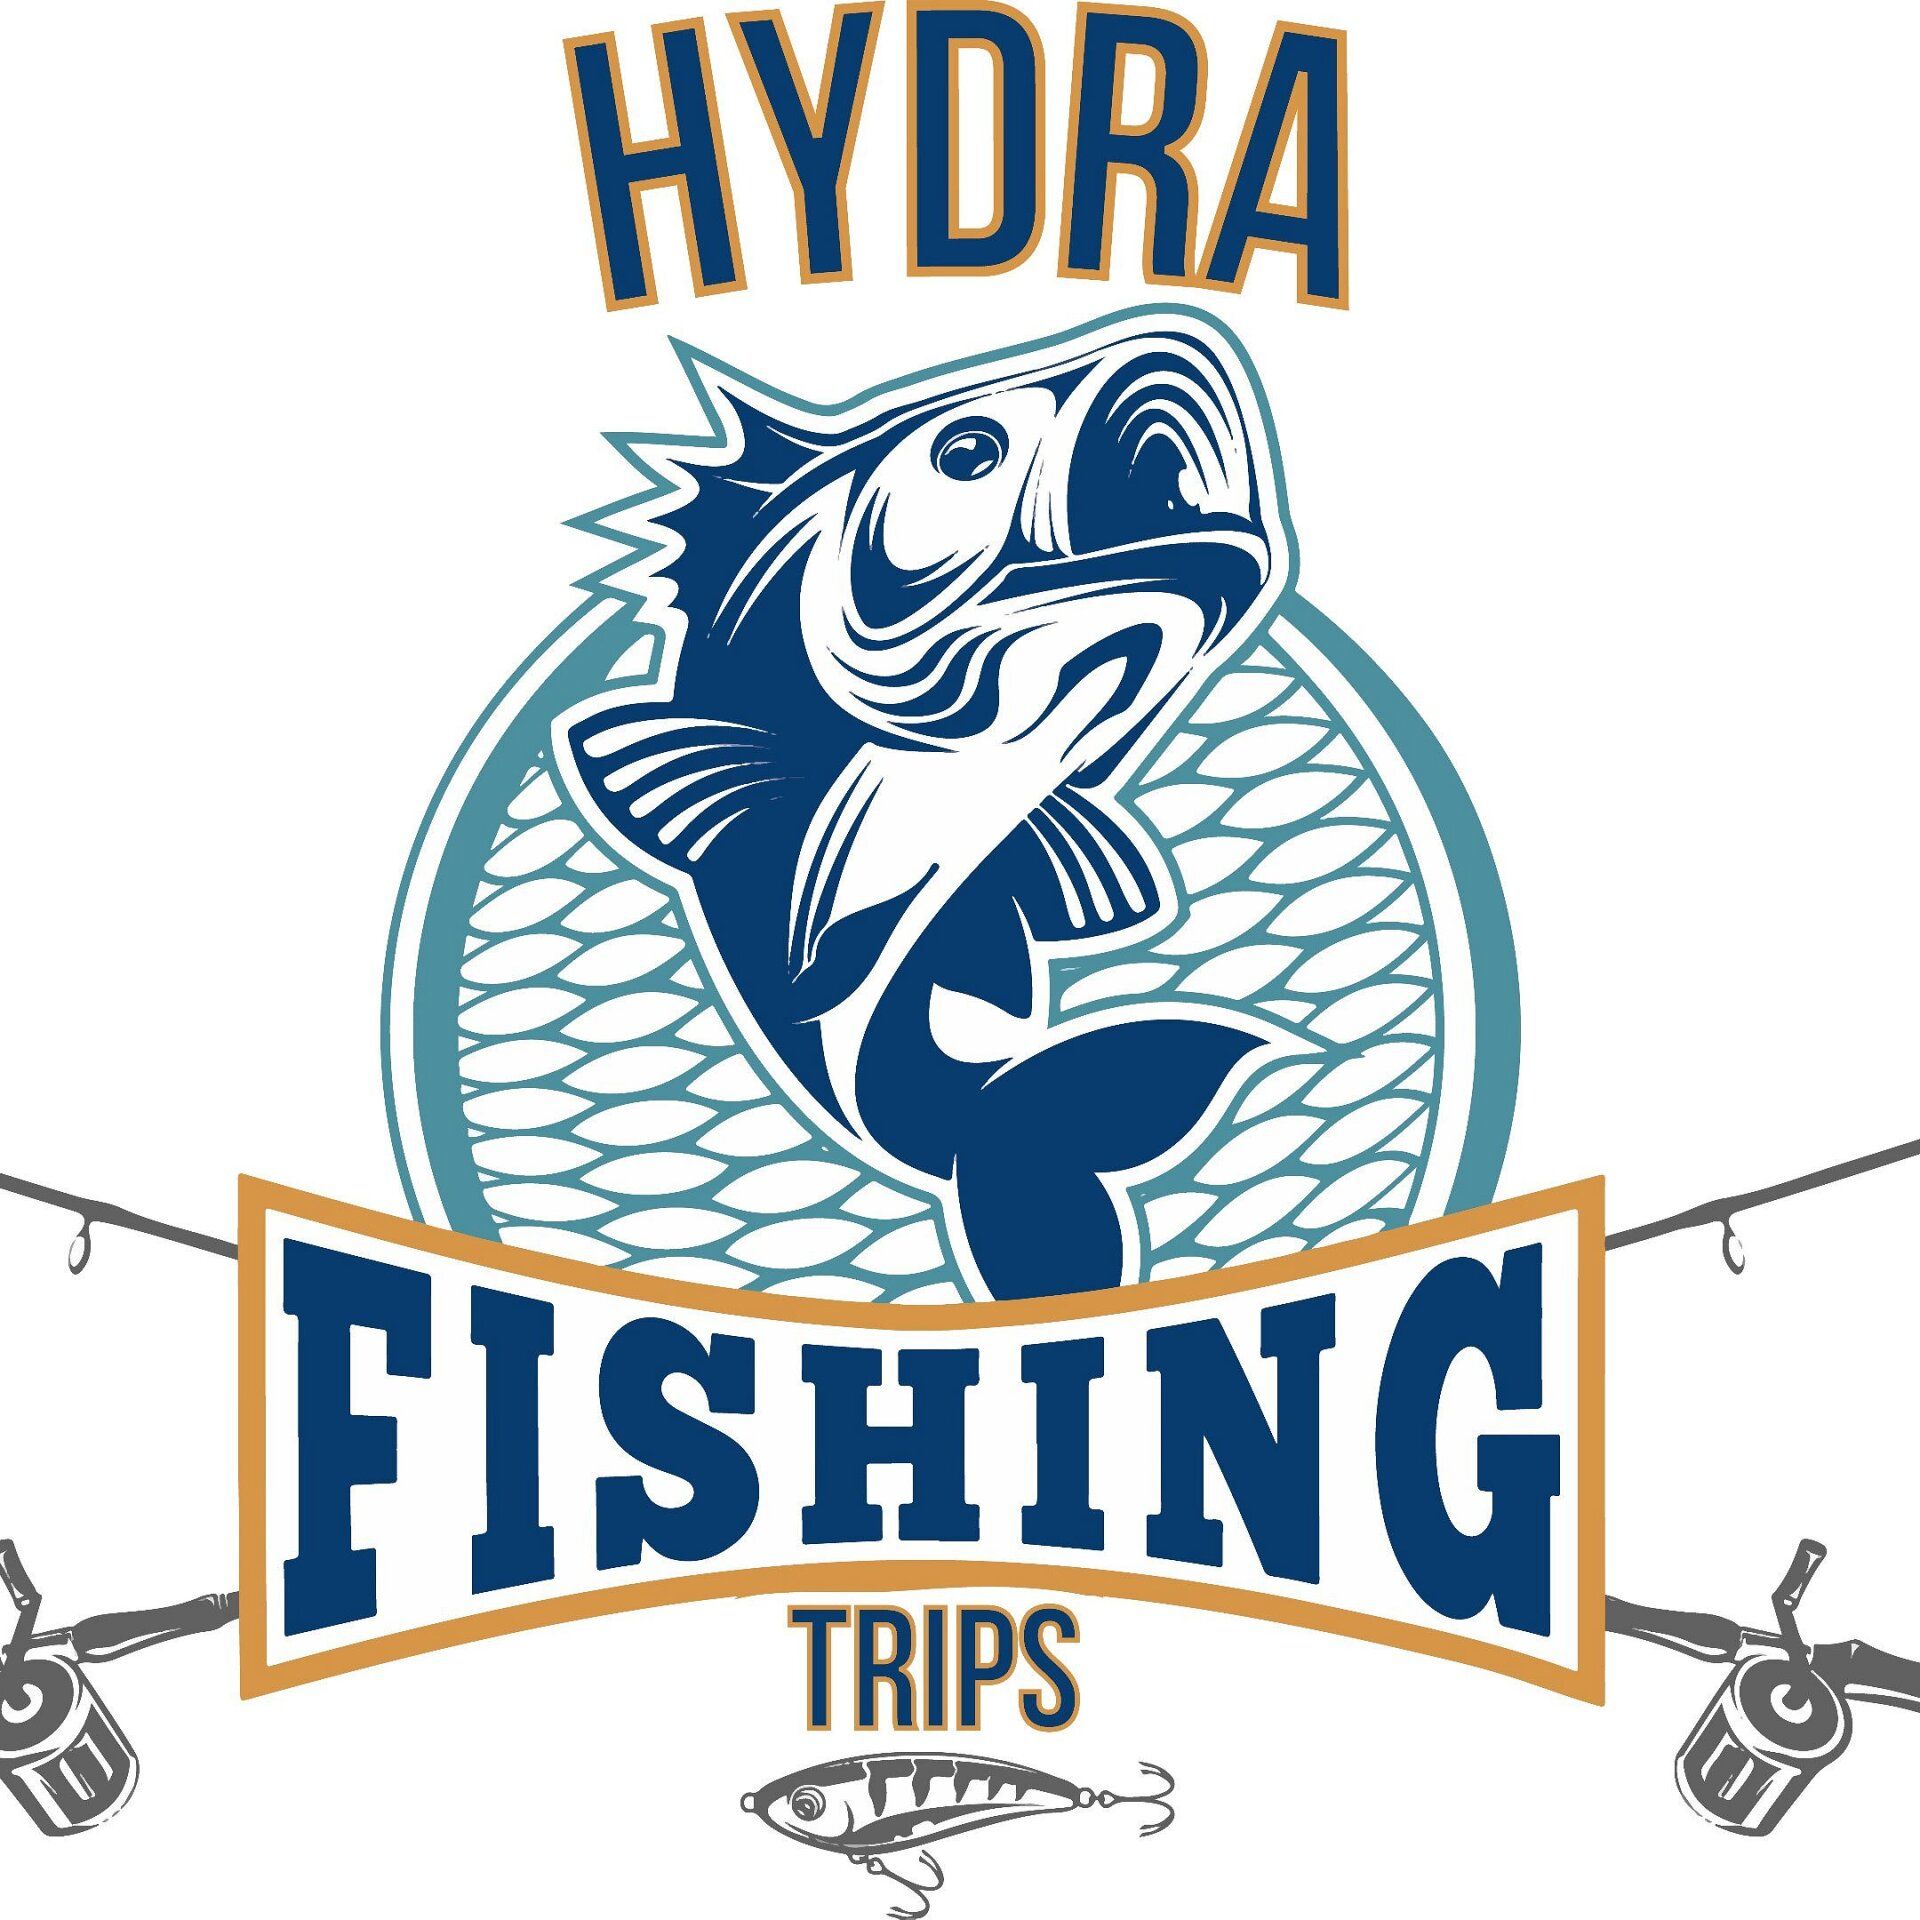 Hydra Fishing Trips on Hydra Island Greece